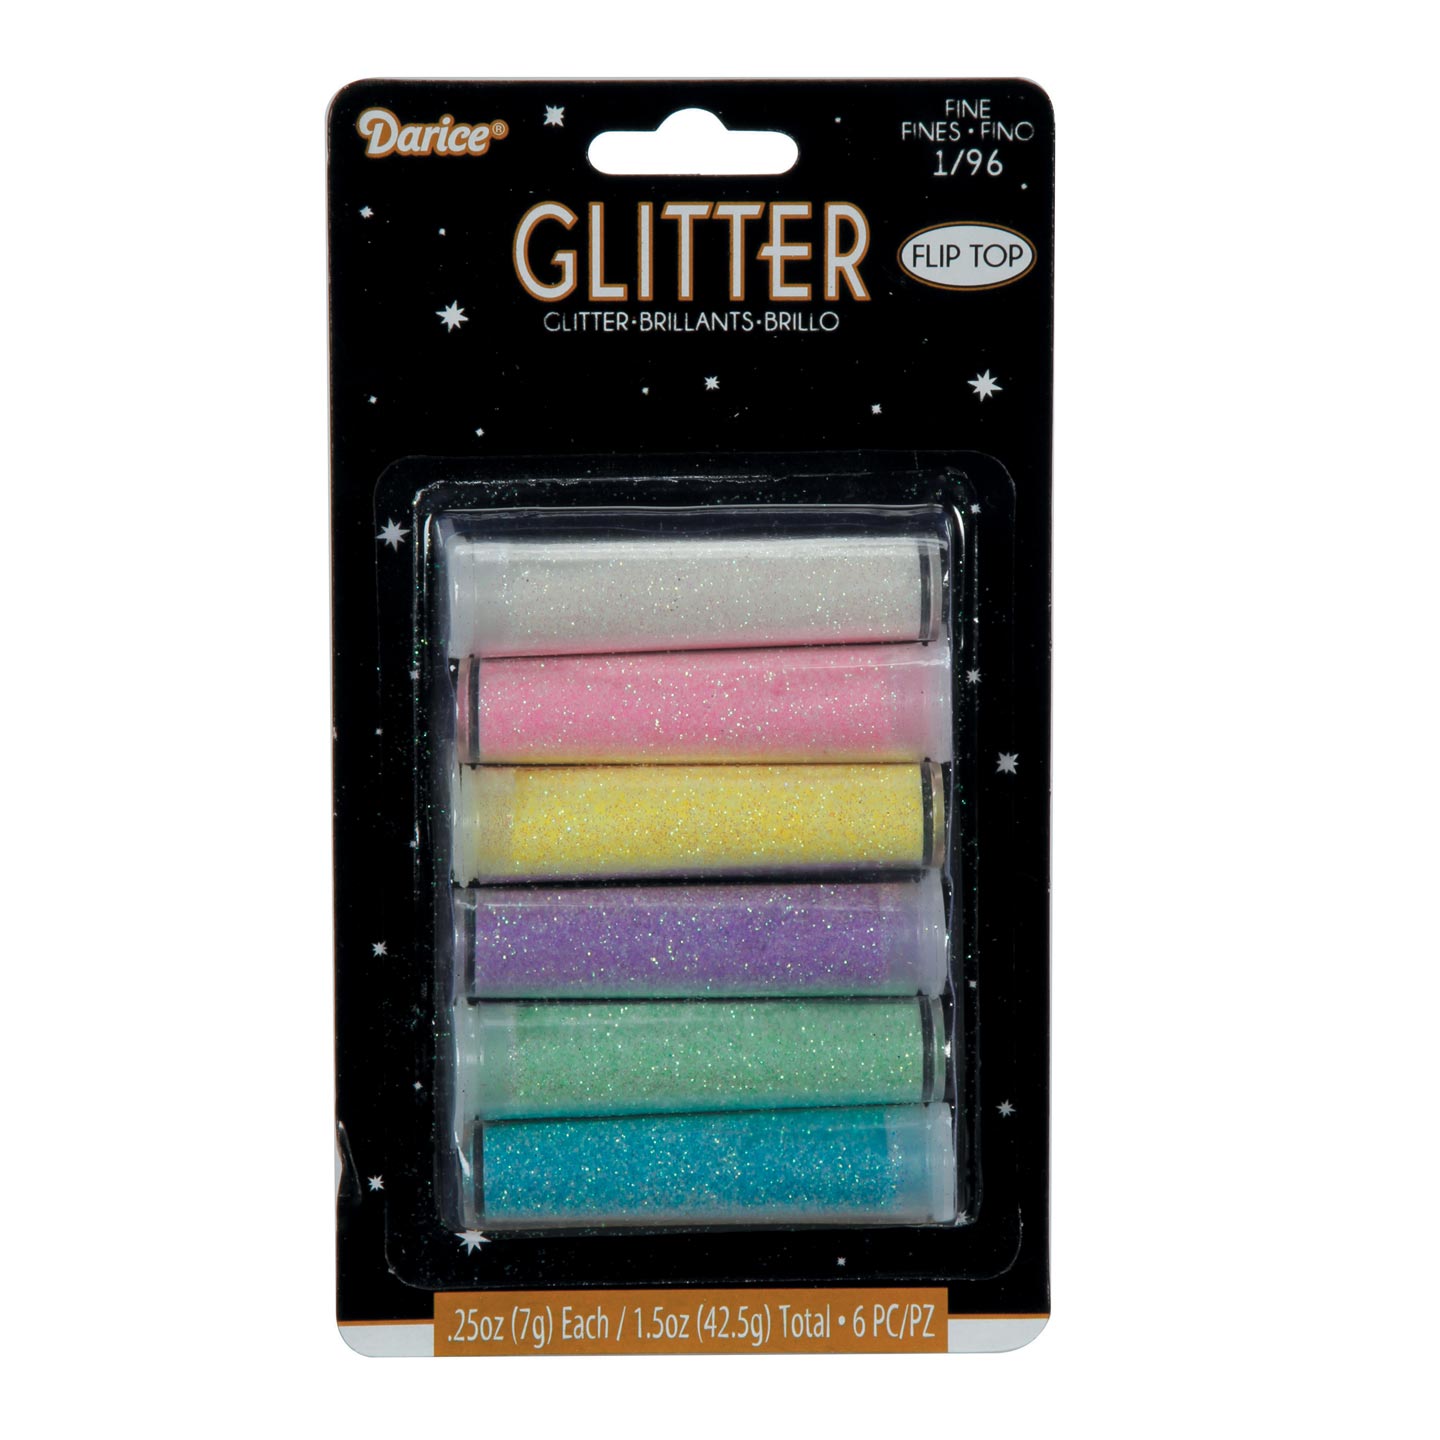 Glitter and Glitter Glue  littlecraftybugs - Craft Glitter